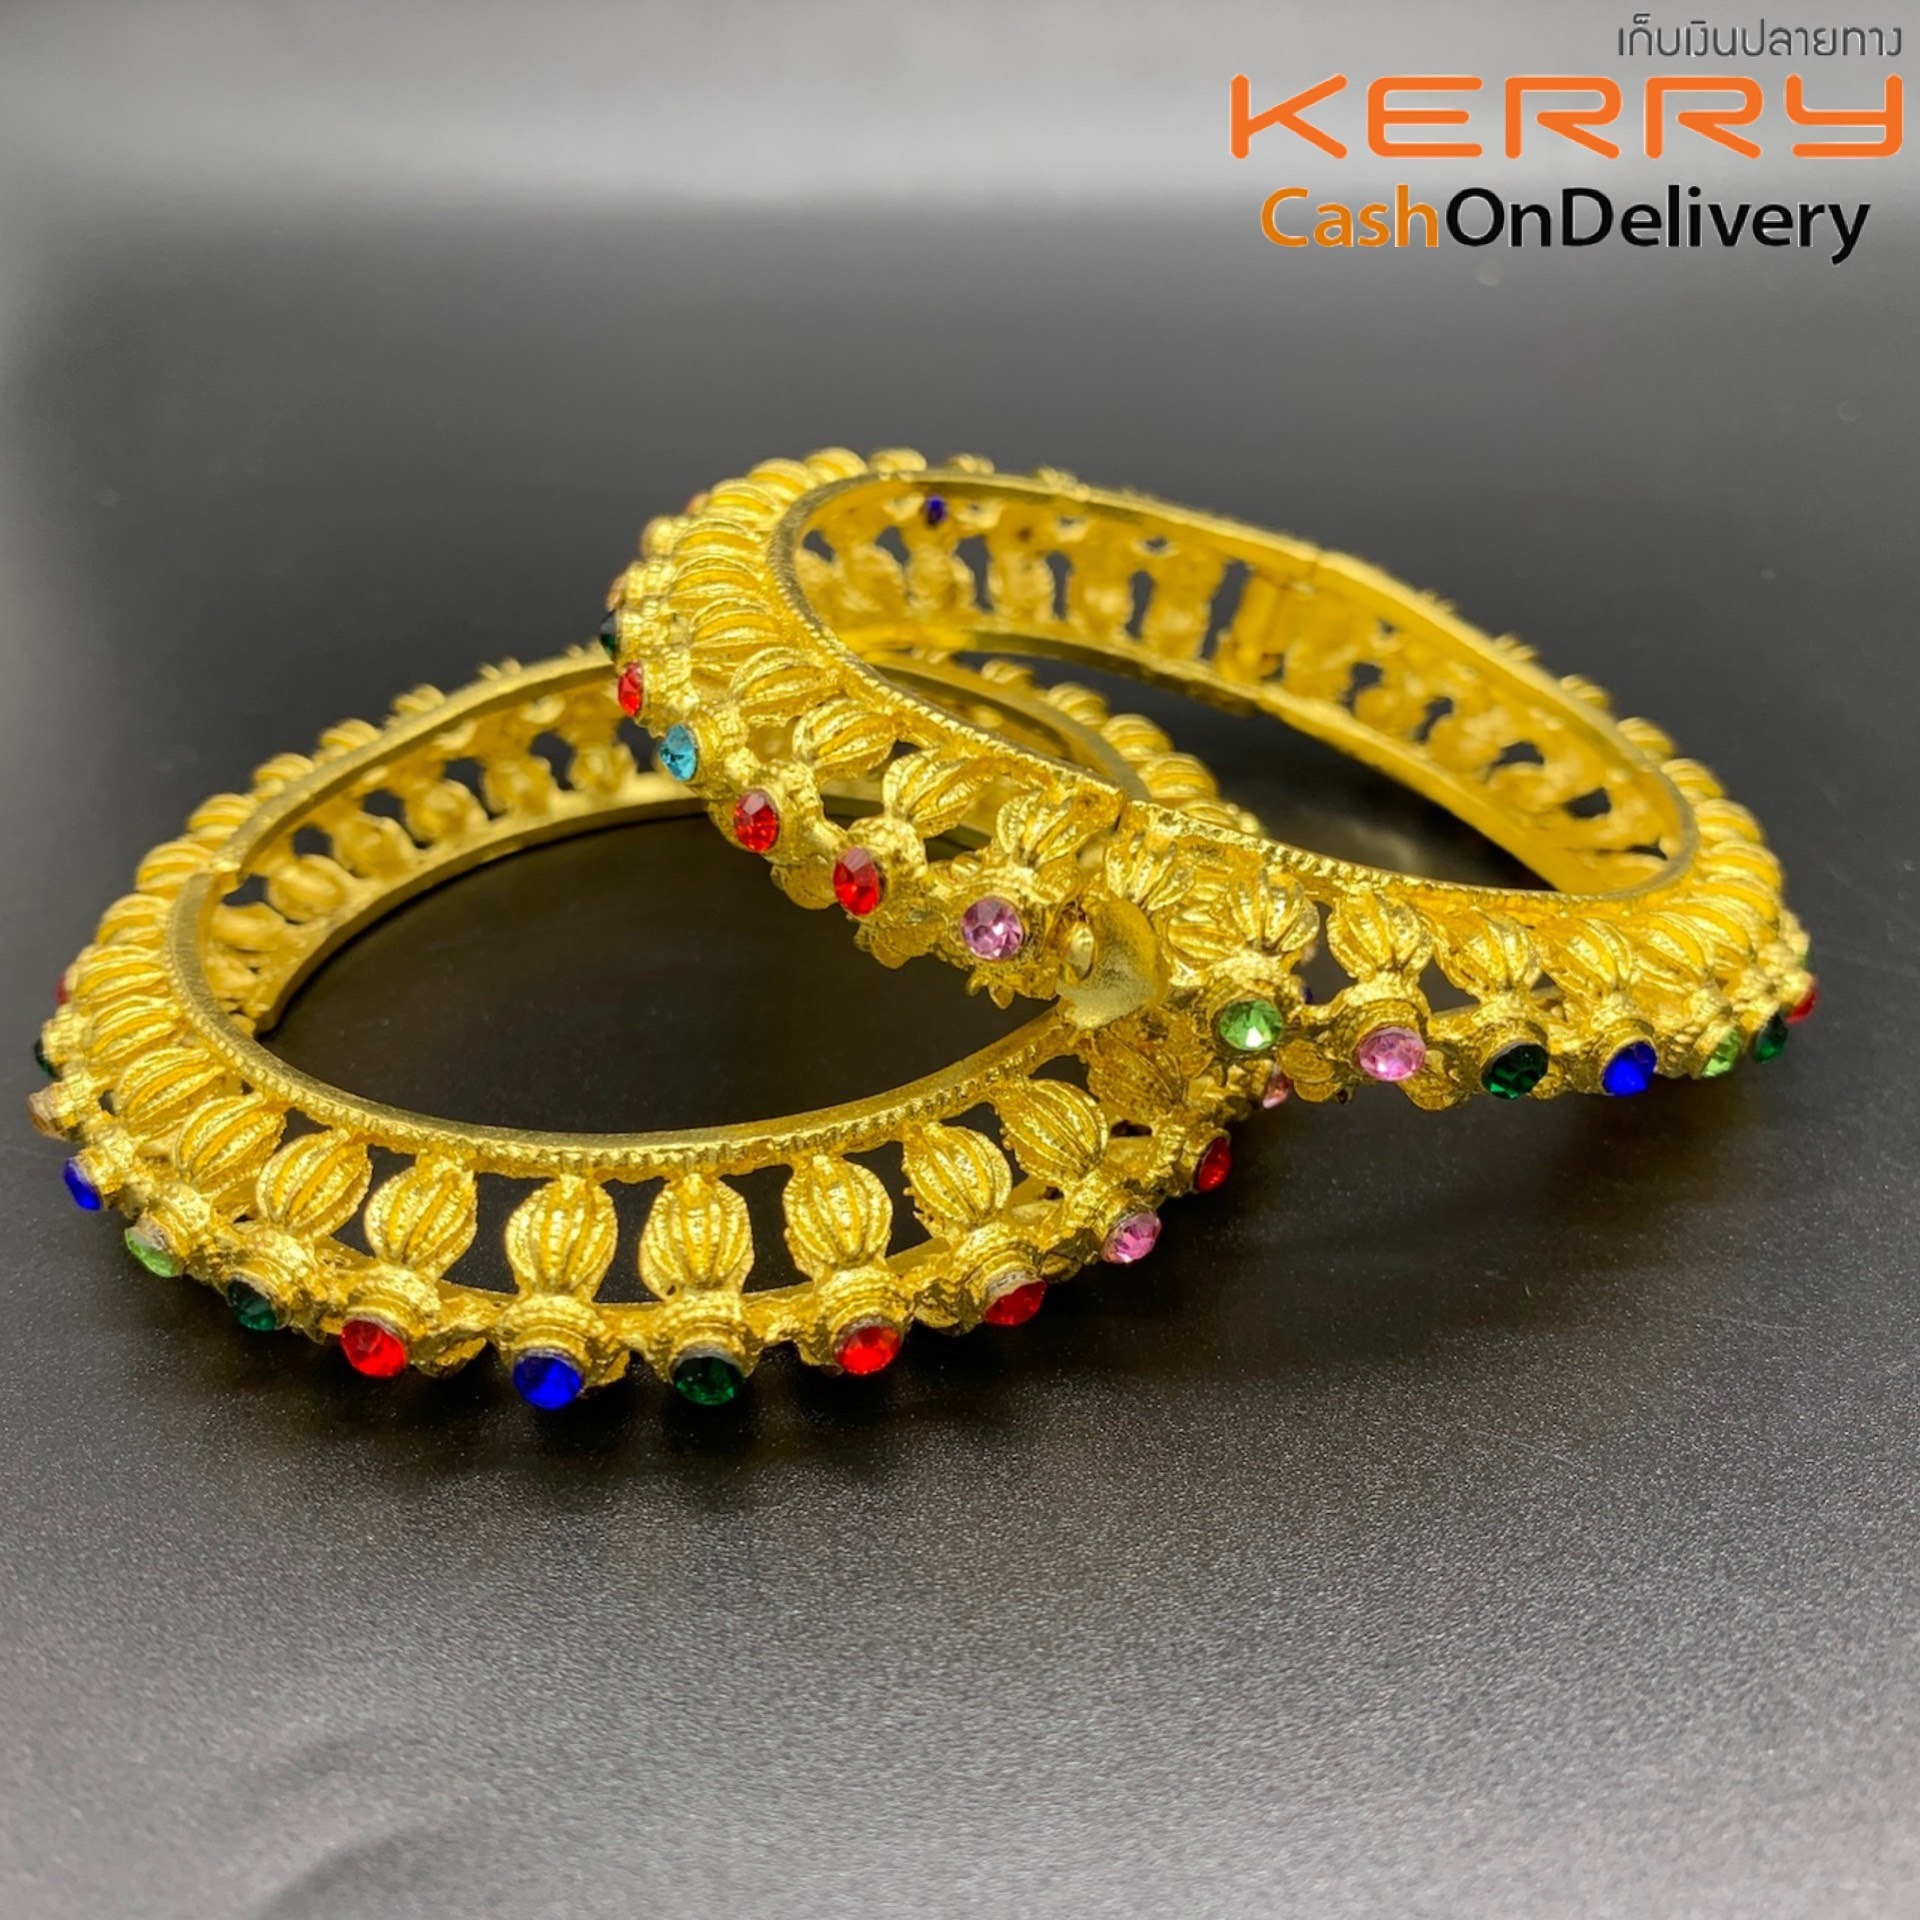 March Jewelry ชุดไทยเครื่องประดับเพชรทองกำไลข้อมือคู่Gold Bracelet 2pcs